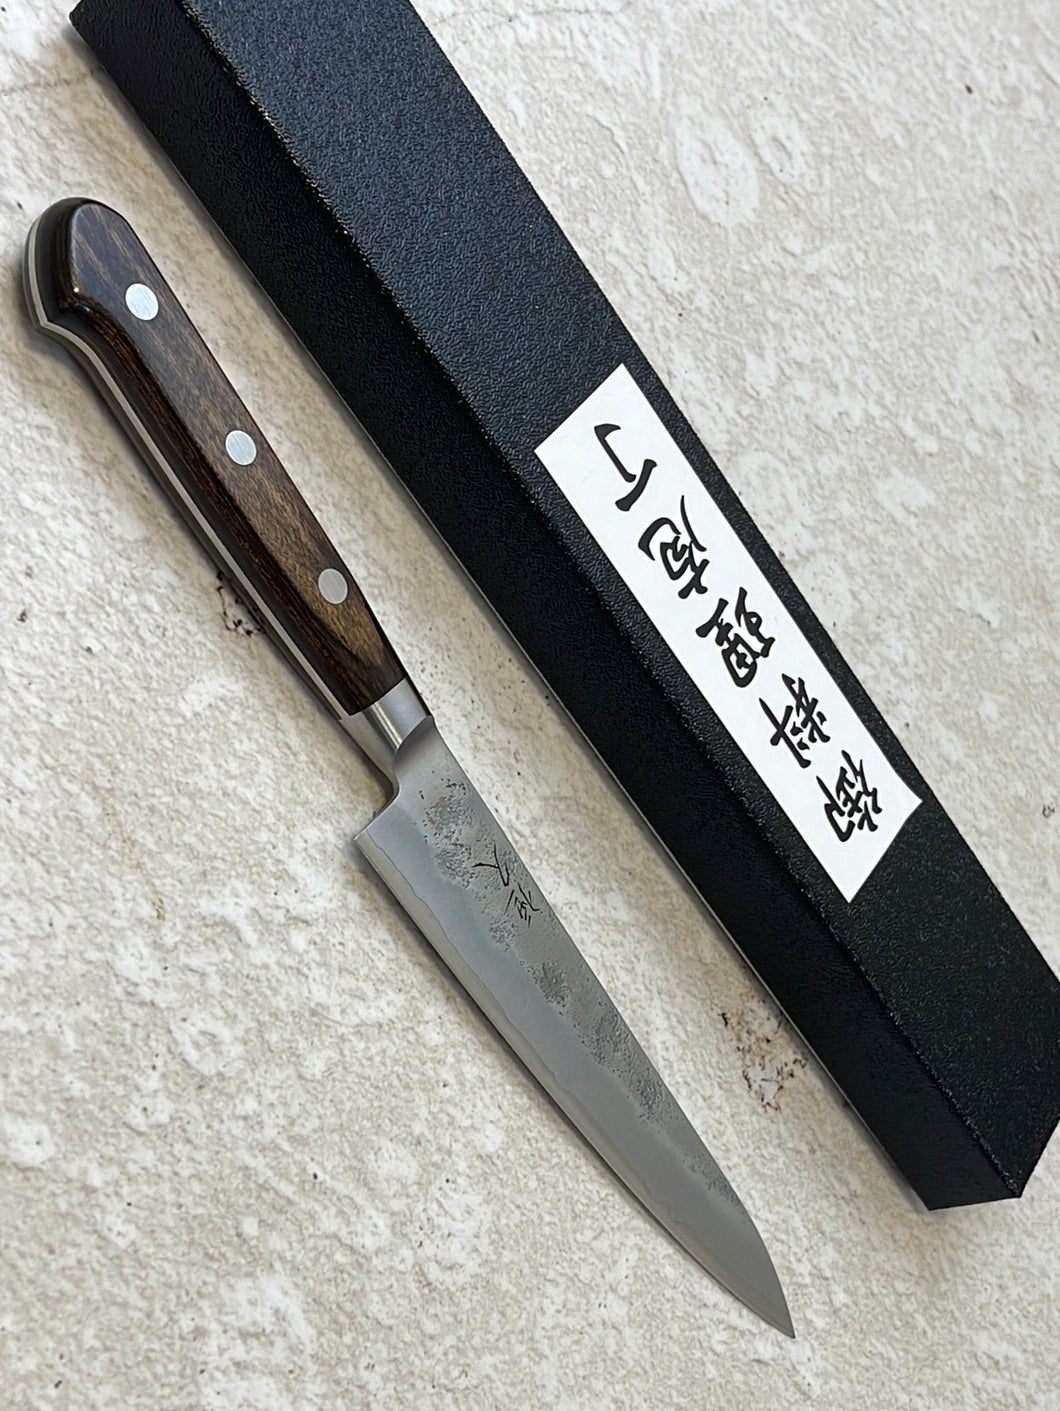 Tsunehisa G3 Nashiji Brown Petty 135mm - Made in Japan 🇯🇵 With Bolster